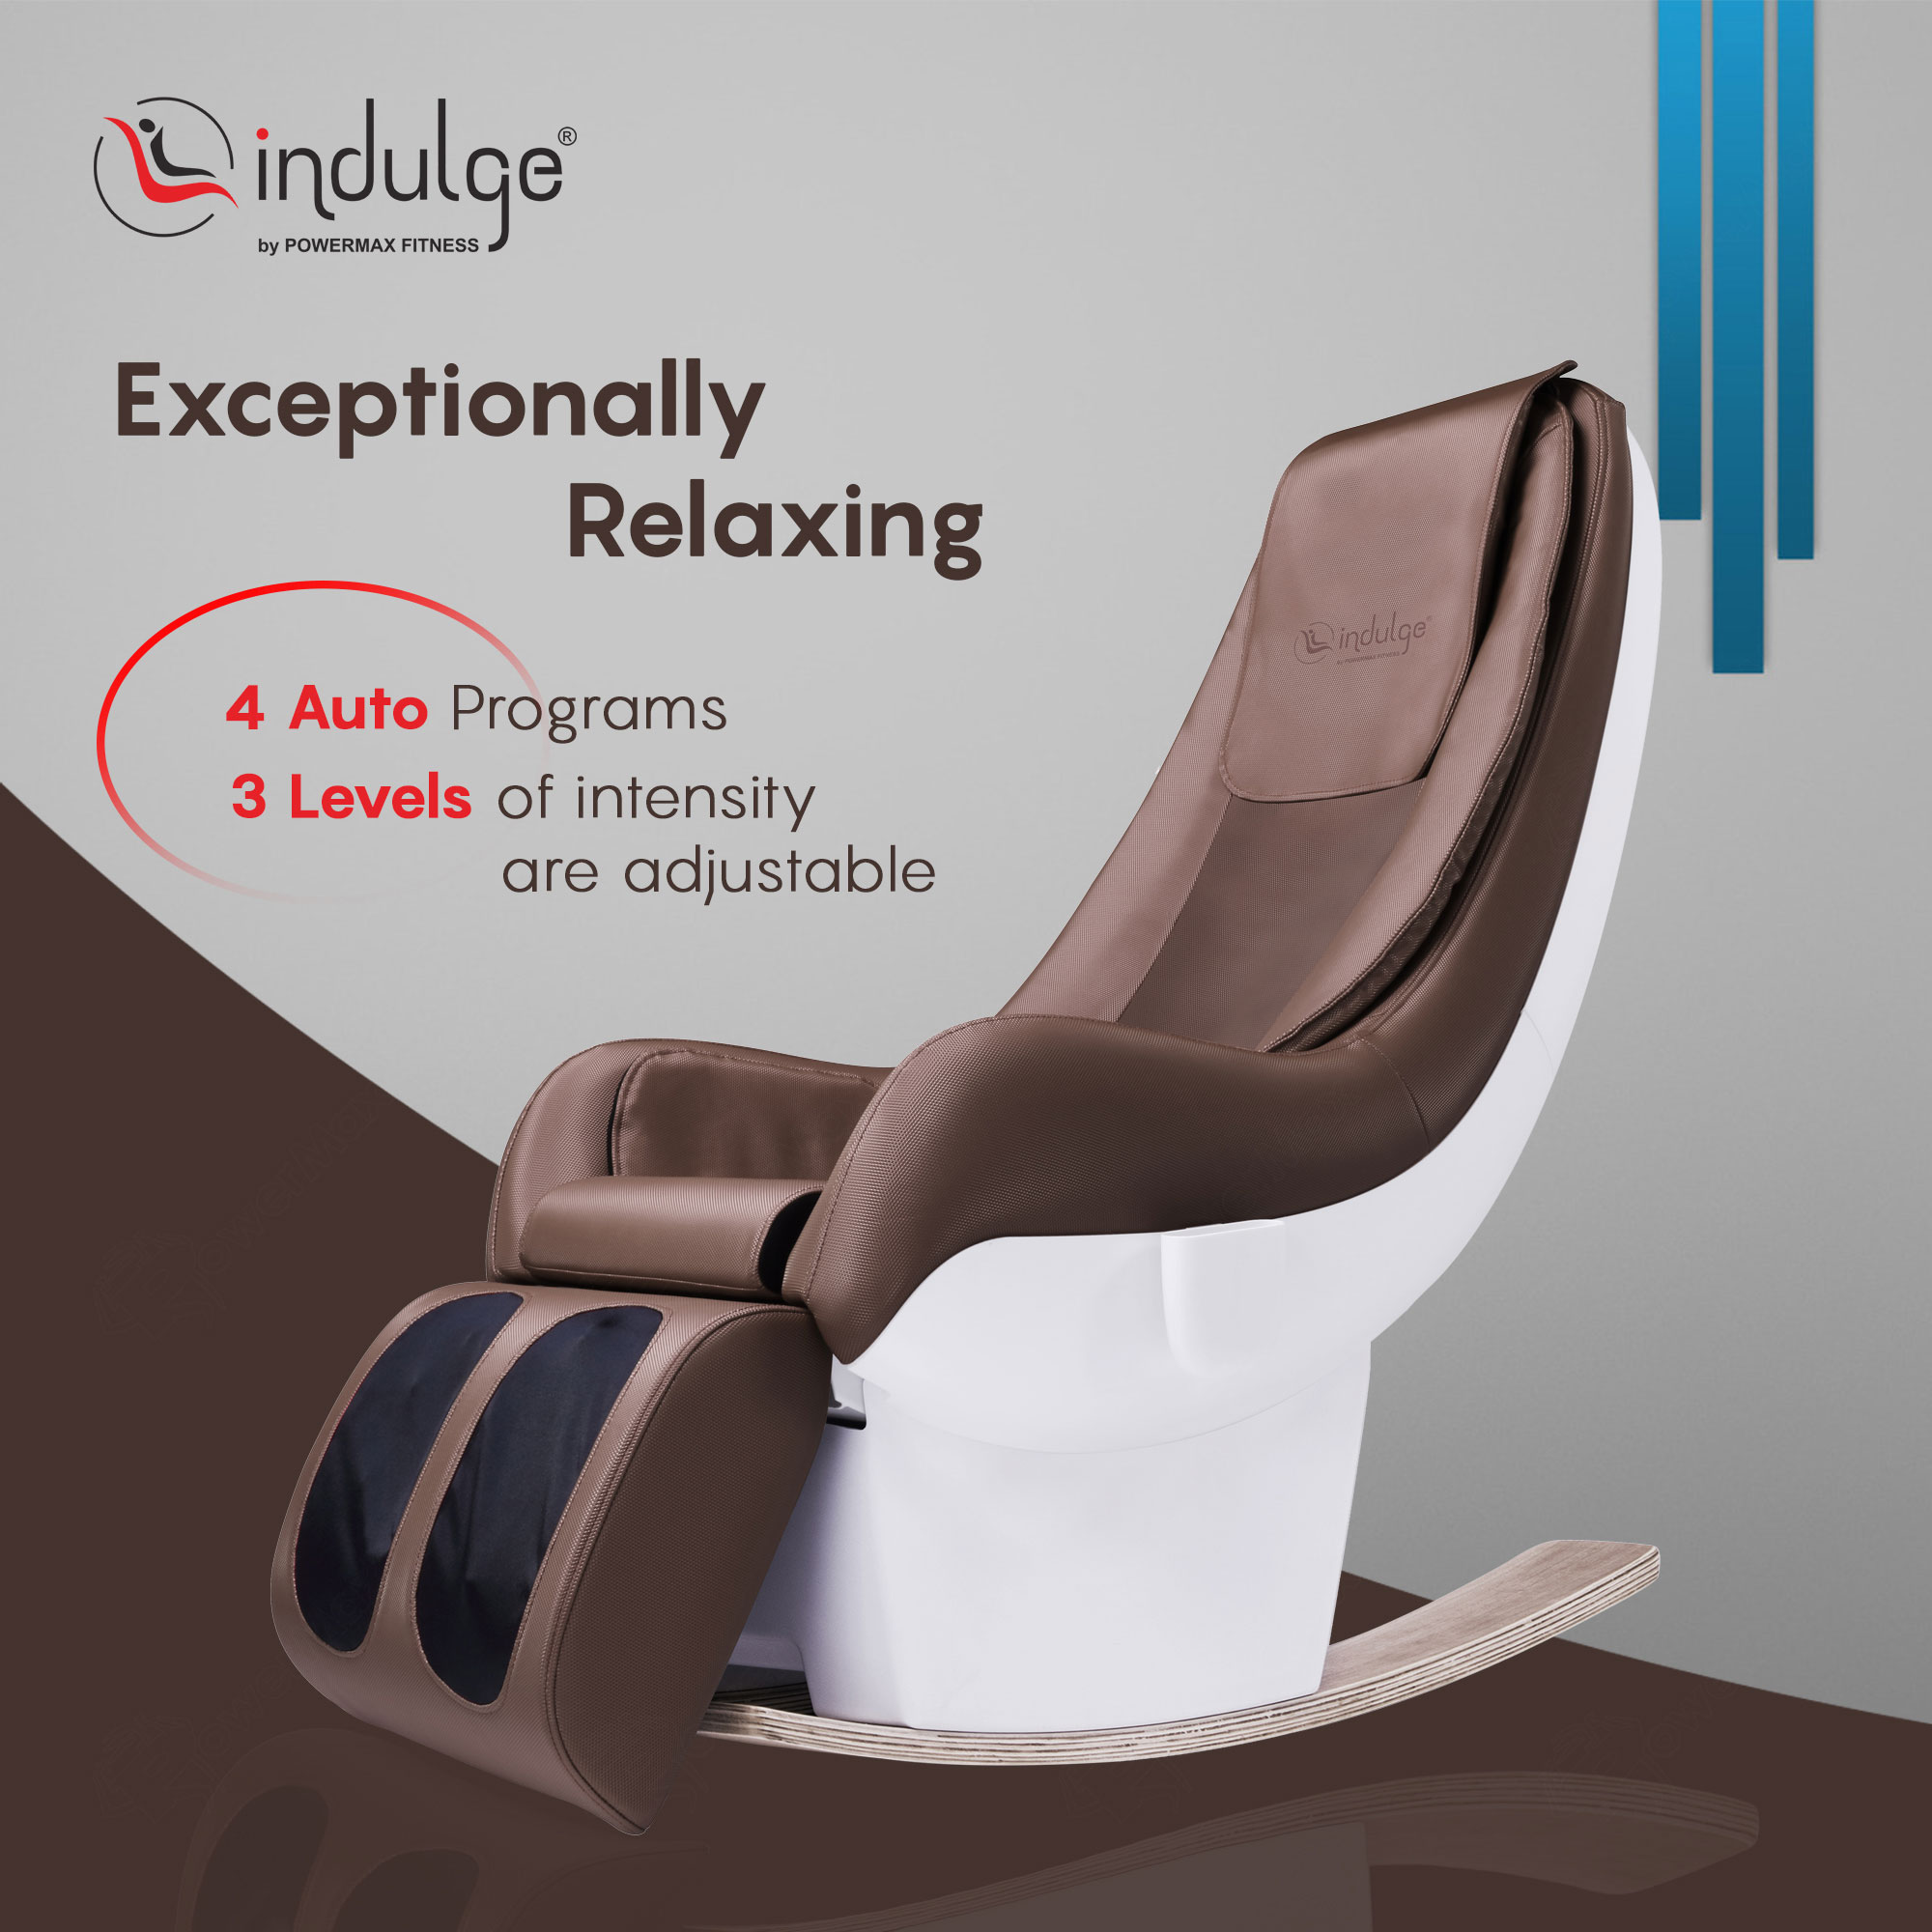 Indulge iS-7R Luxurious Rocking Massage Chair